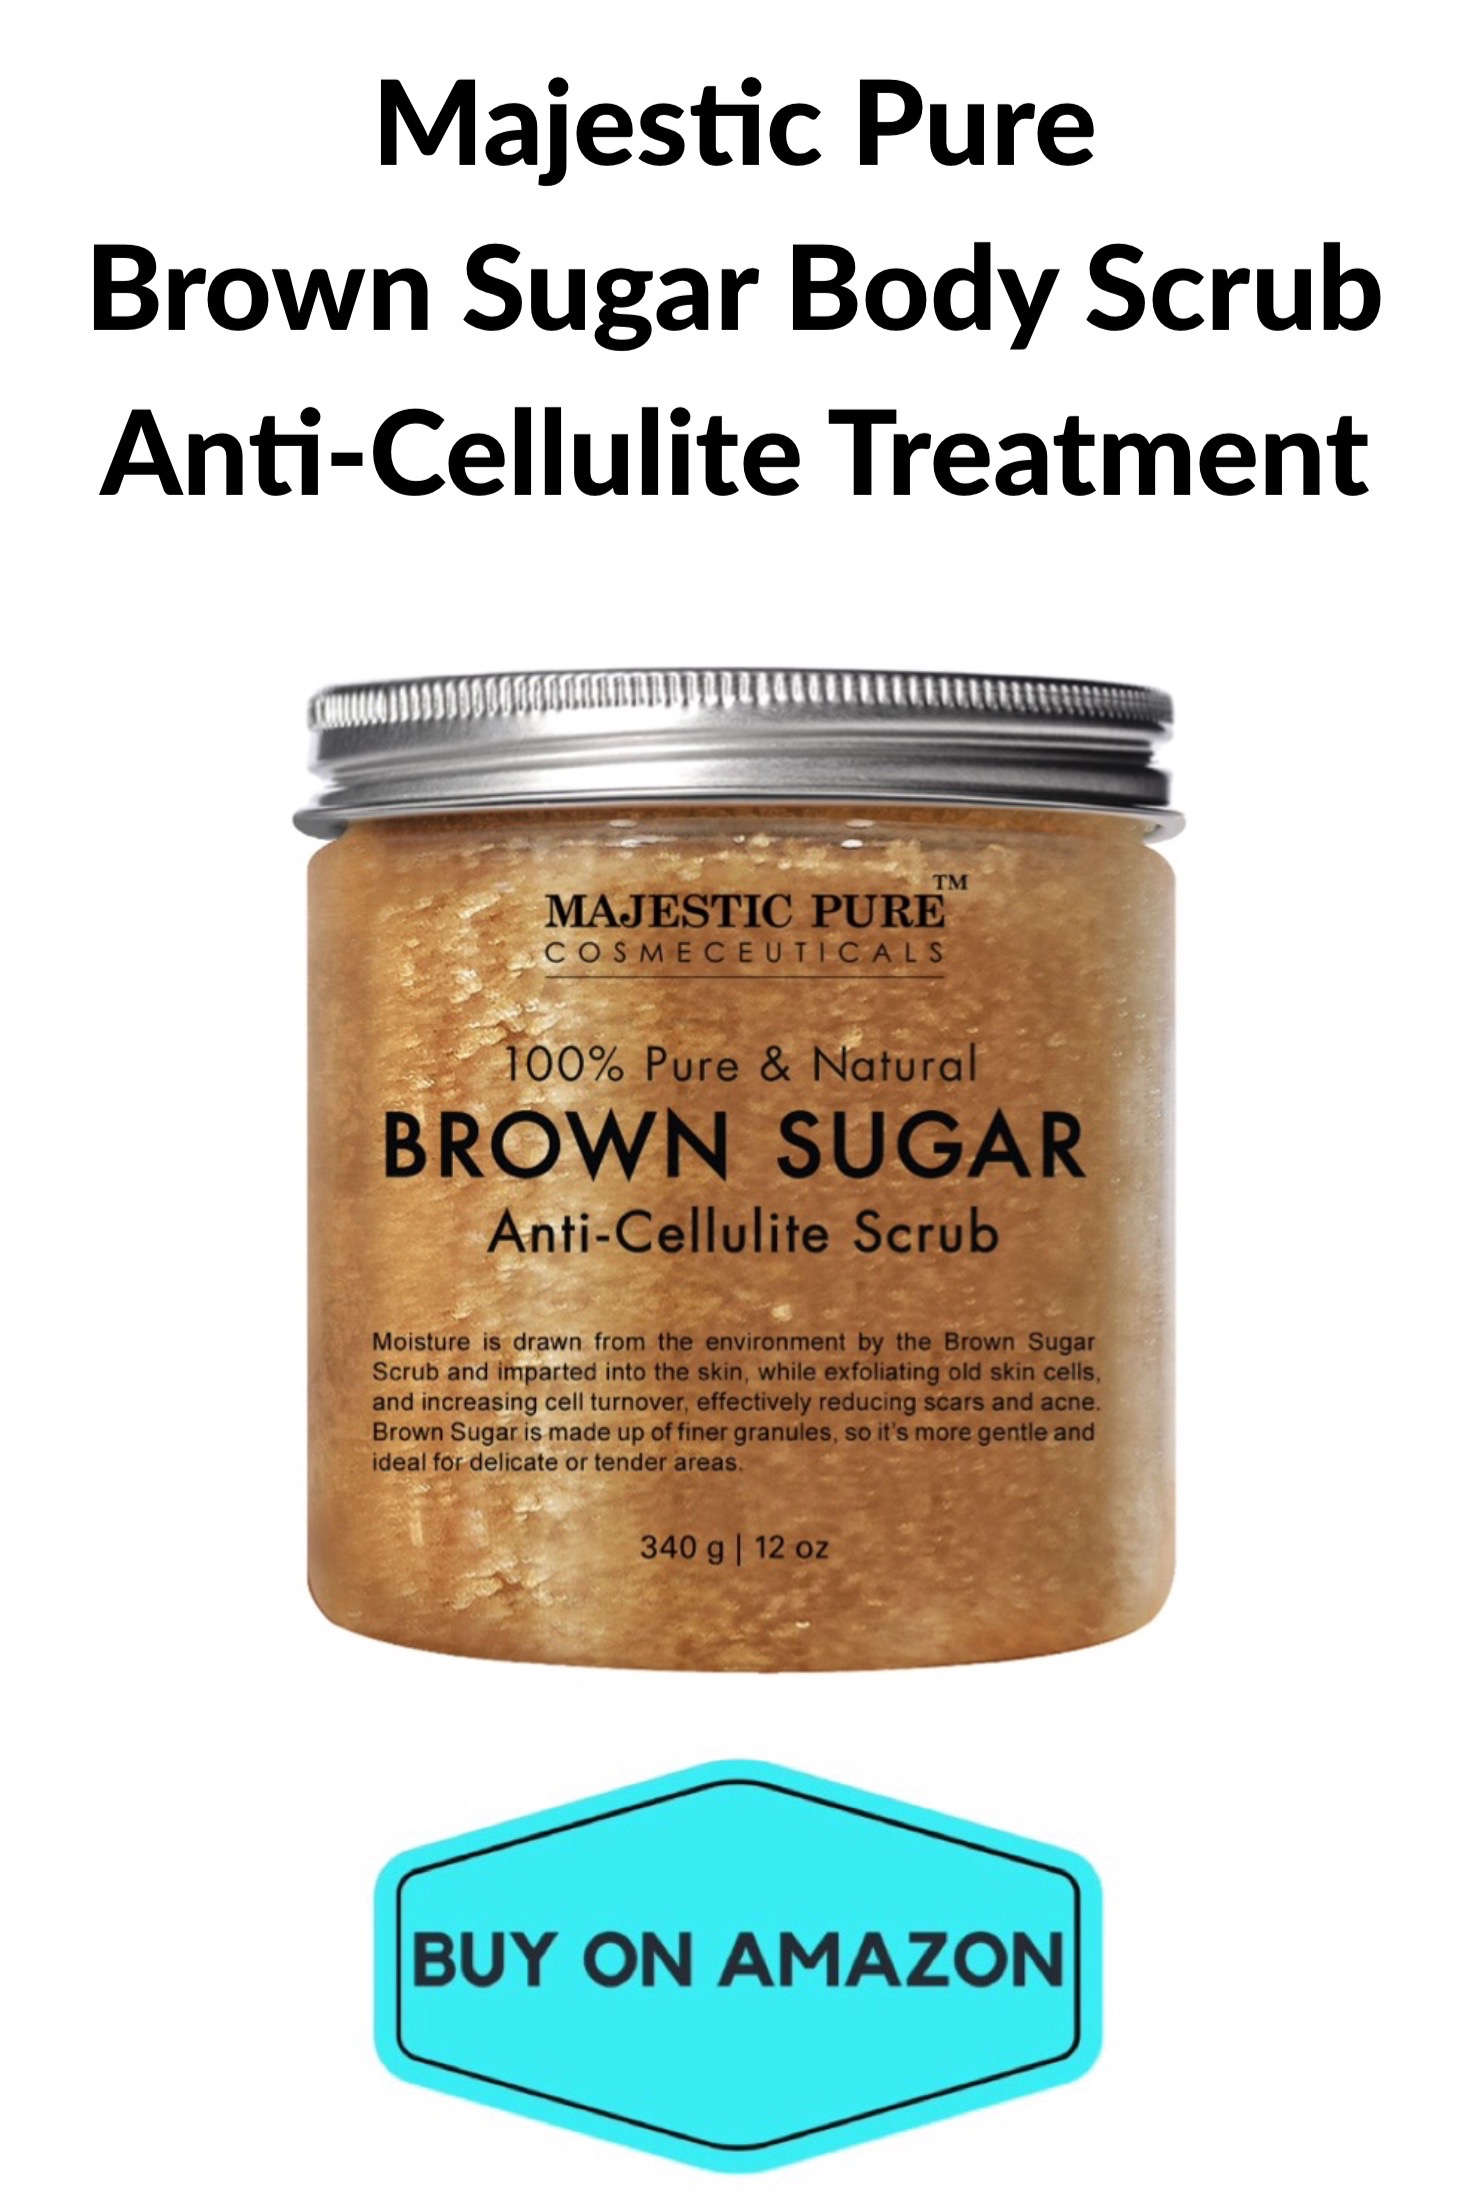 Brown Sugar Body Scrub Anti-Cellulite Treatment